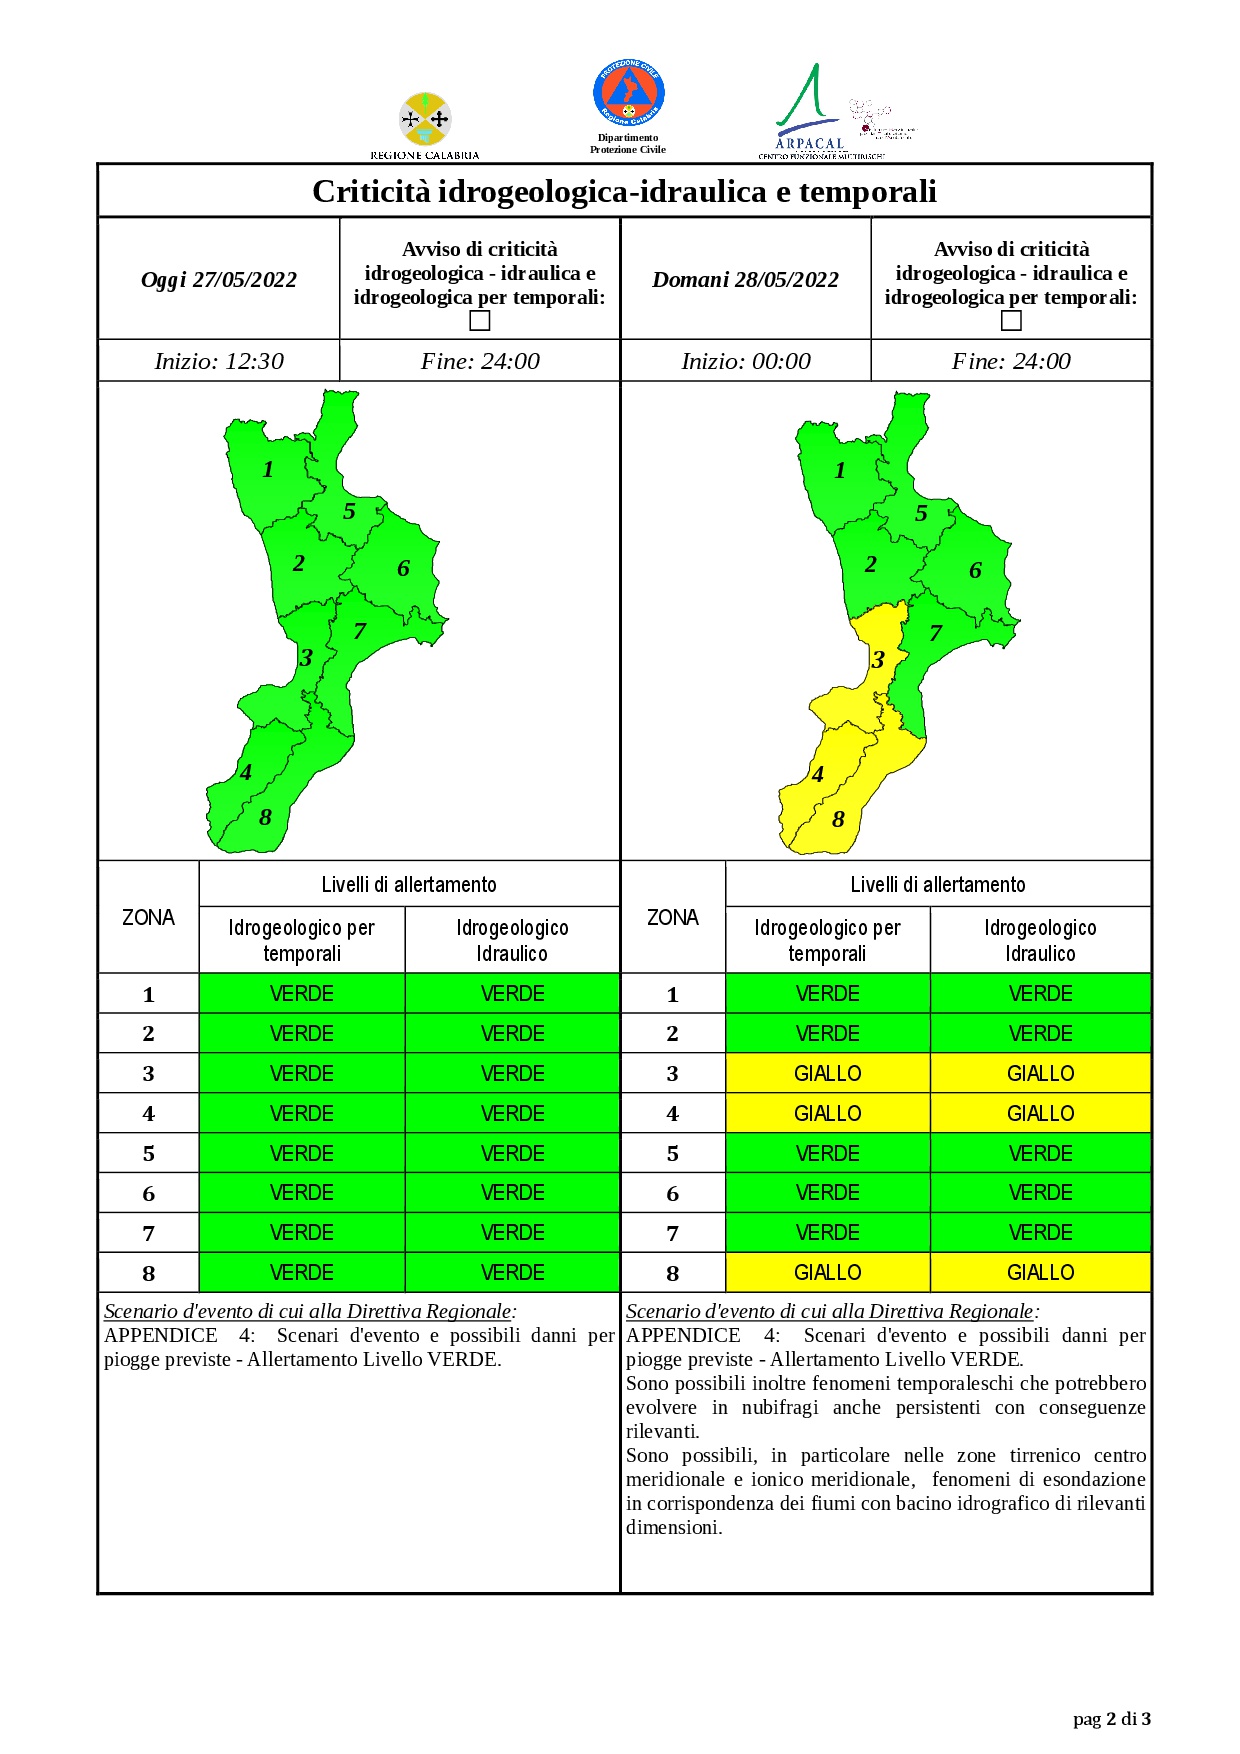 Criticità idrogeologica-idraulica e temporali in Calabria 27-05-2022